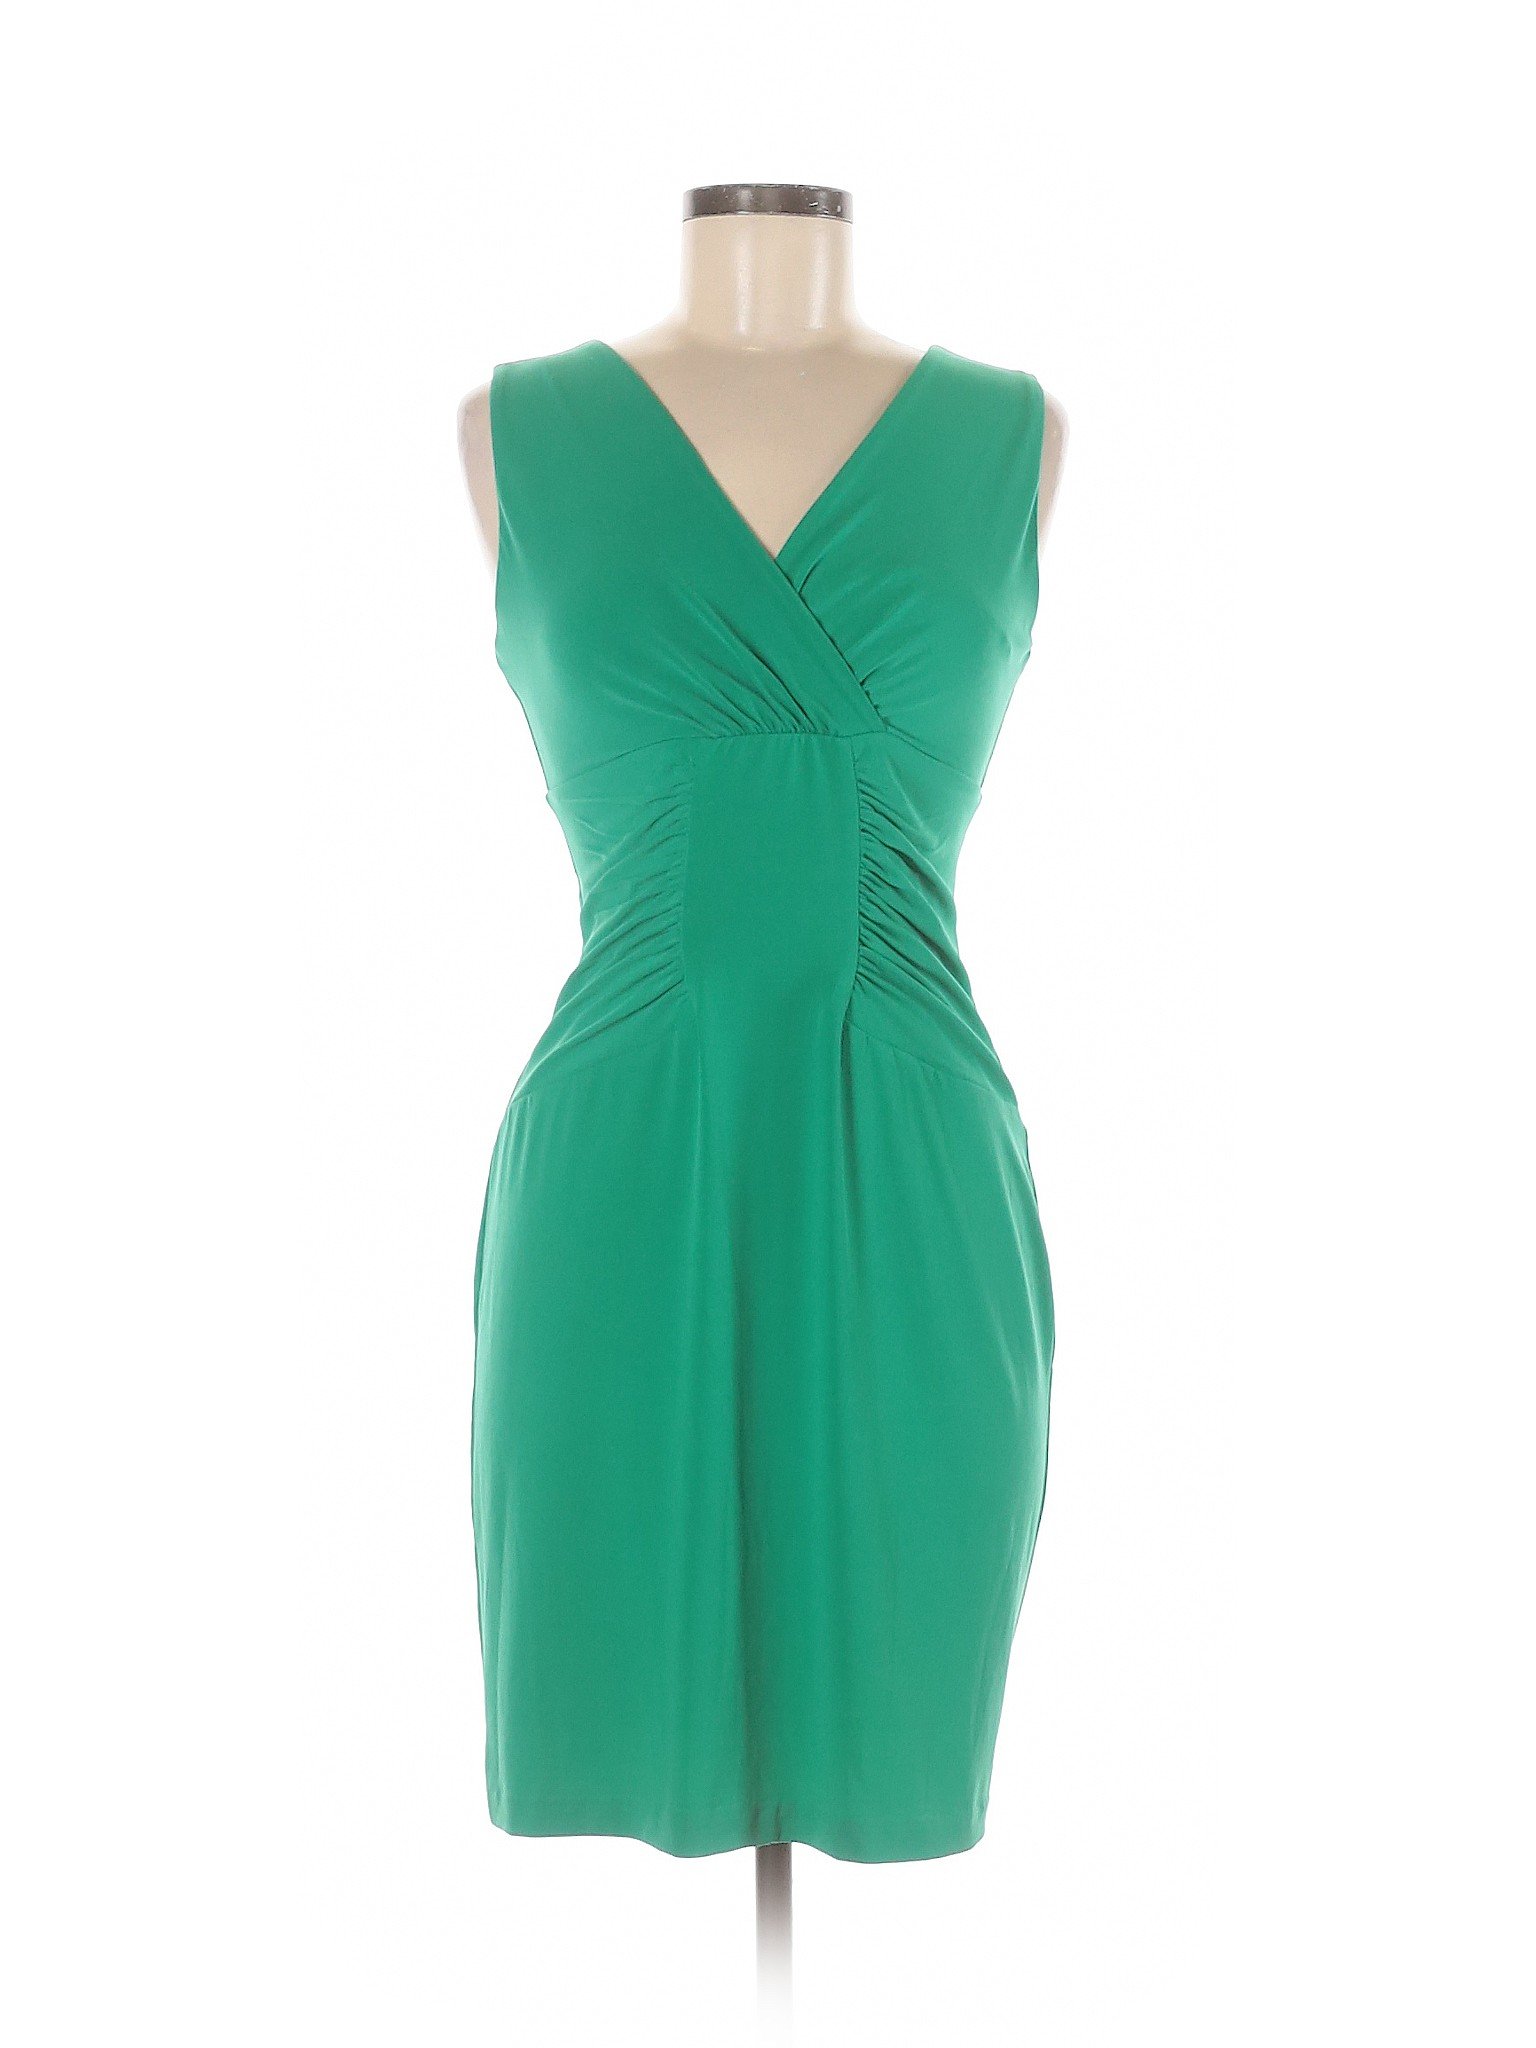 Calvin Klein Women Green Cocktail Dress 2 | eBay